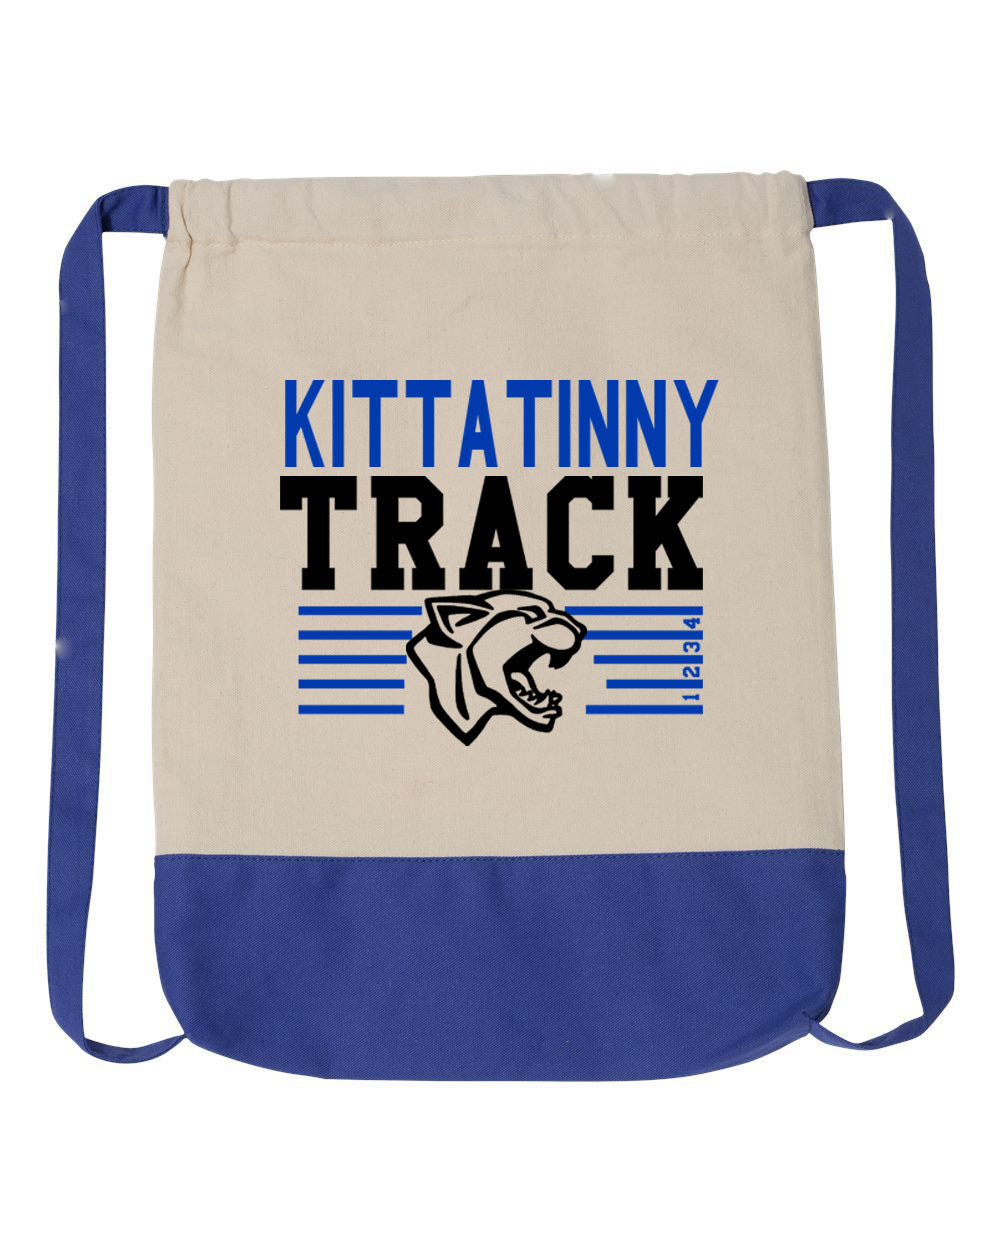 Kittatinny Track Drawstring Bag Design 5